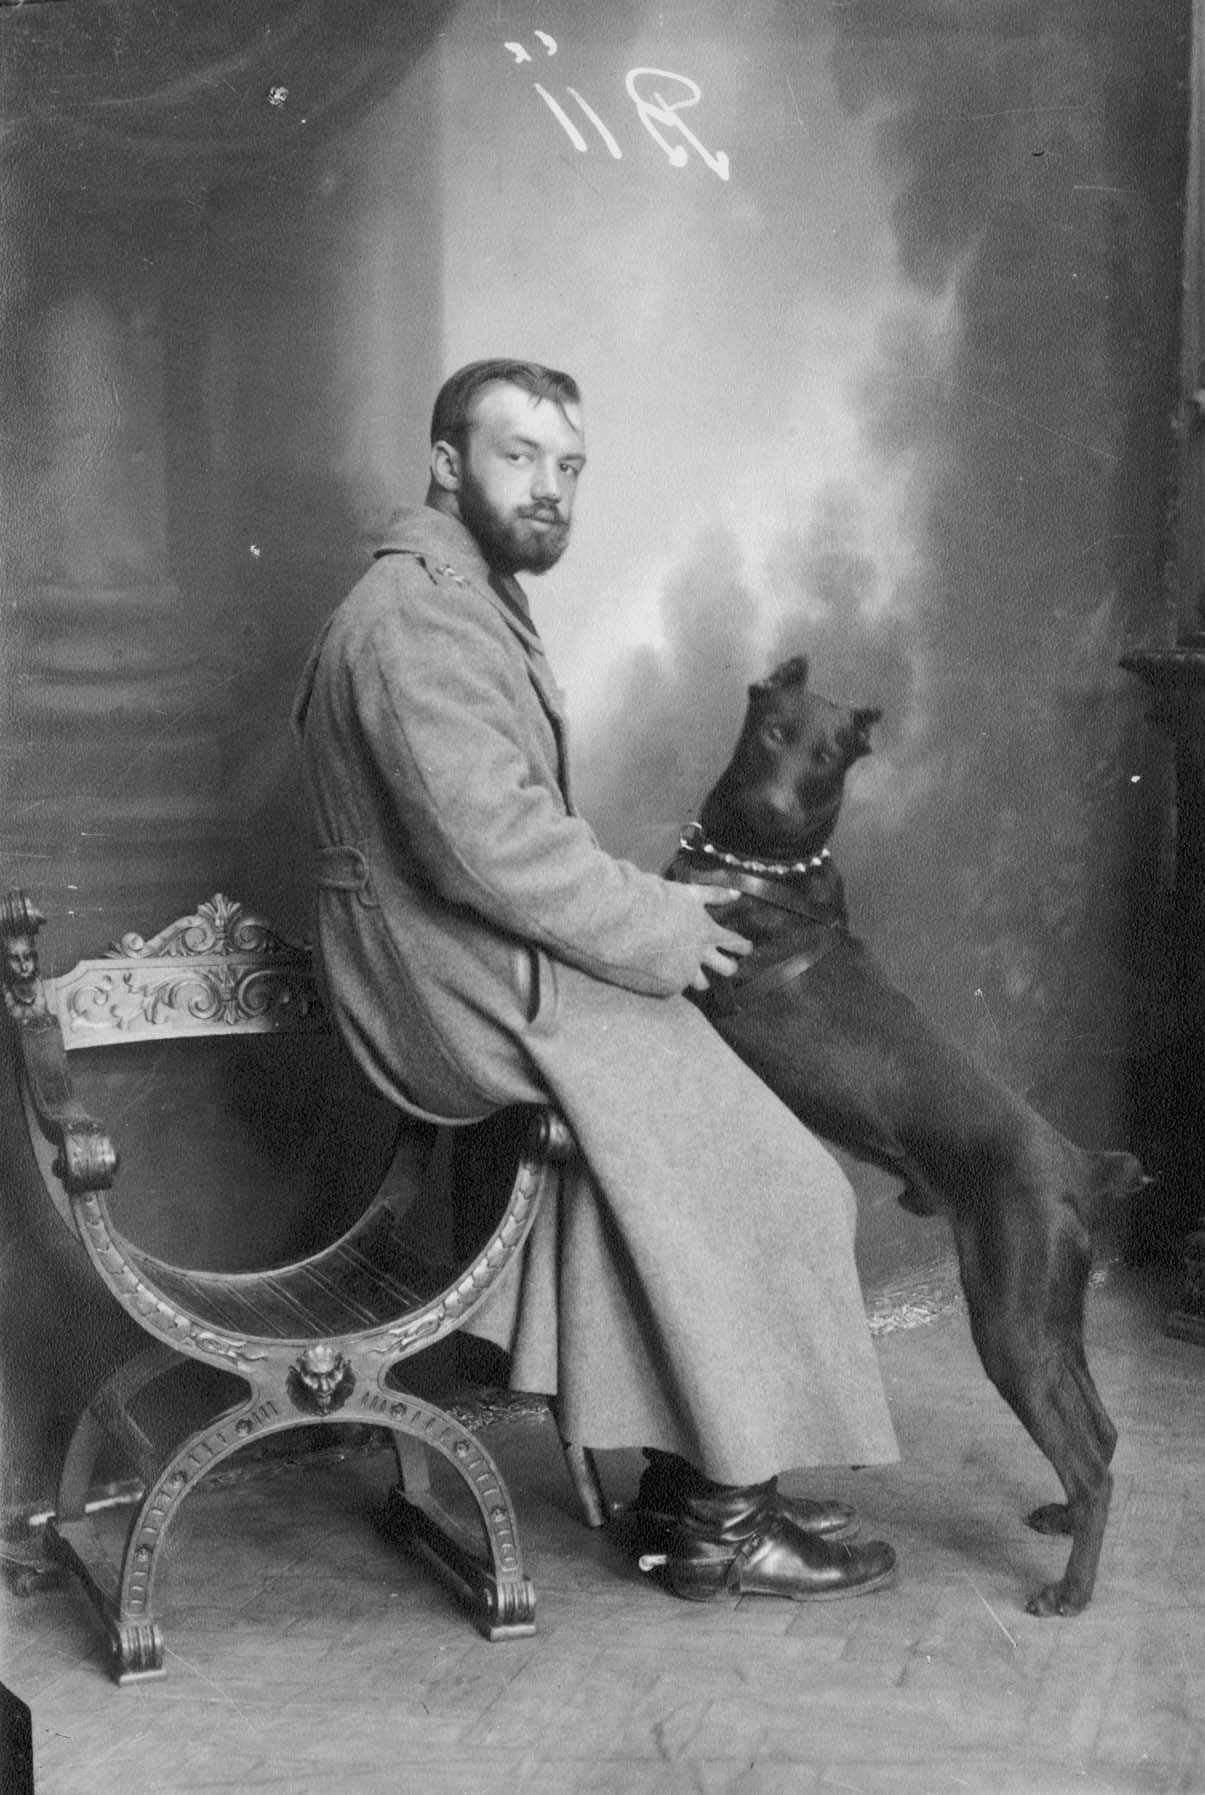 vintage photograph of doberman dog with man 1914 lwow